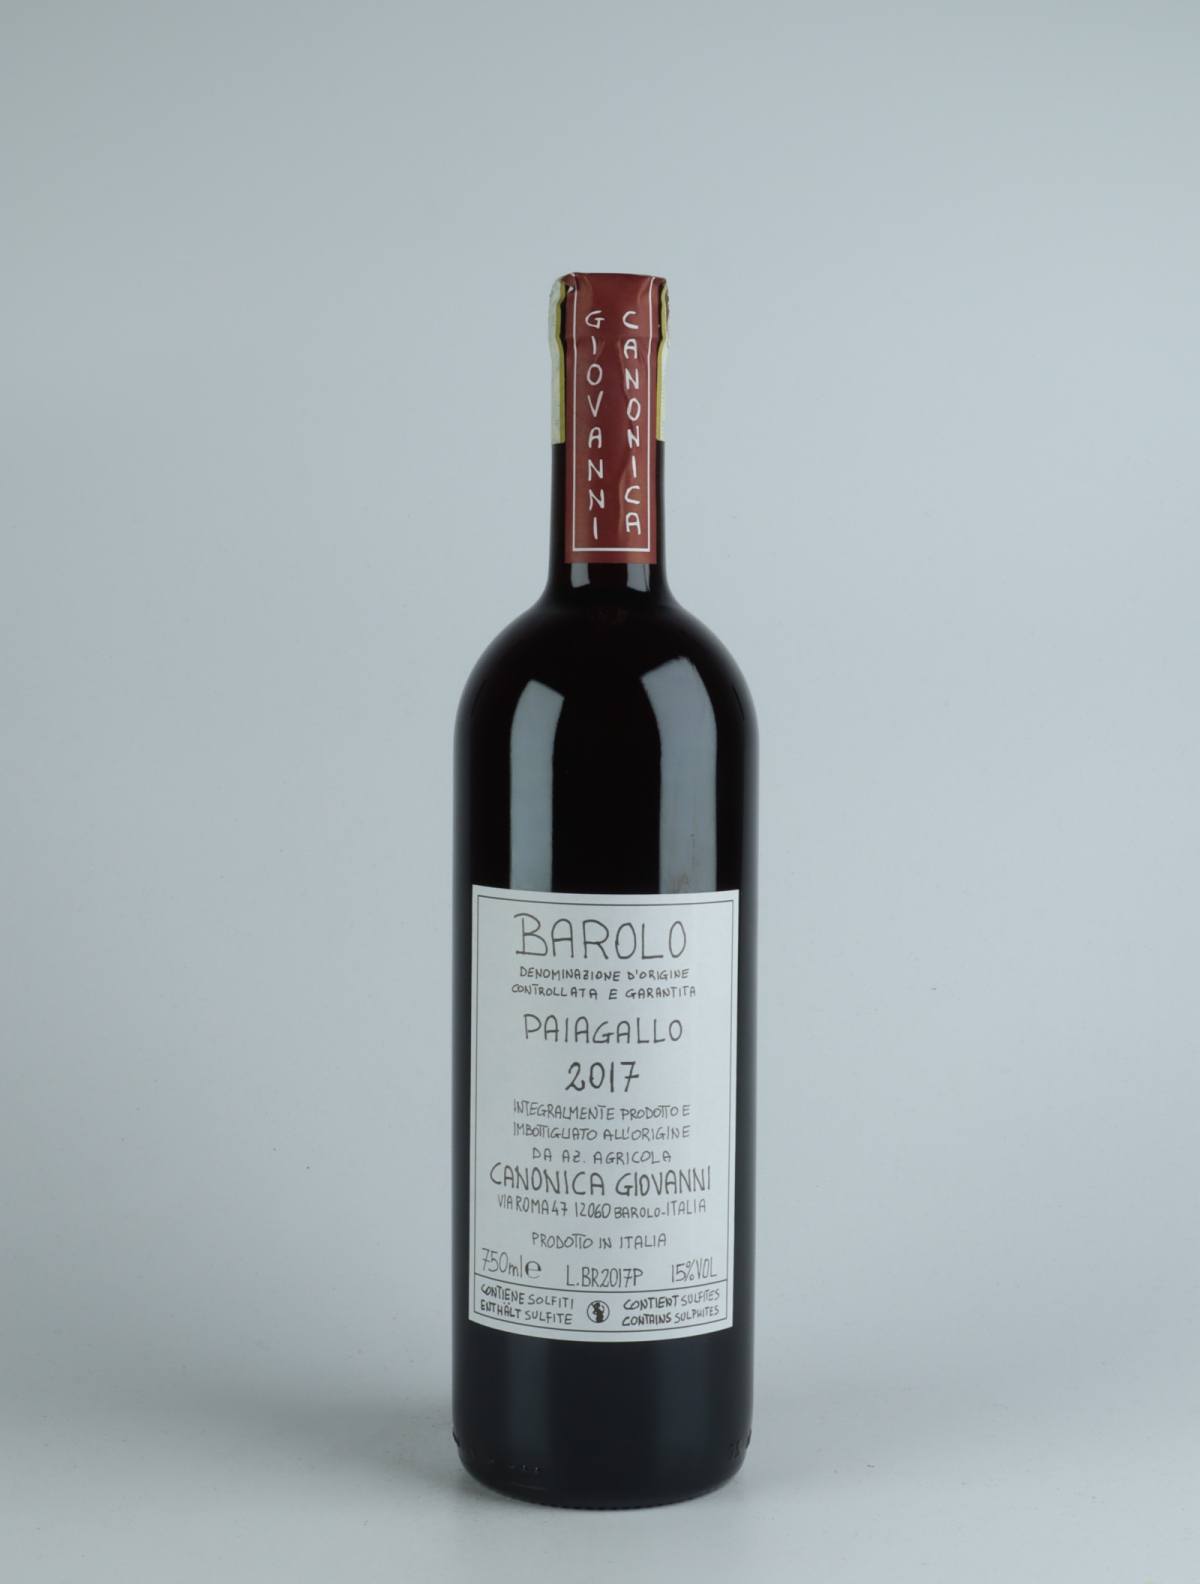 En flaske 2017 Barolo - Paiagallo Rødvin fra Giovanni Canonica, Piemonte i Italien